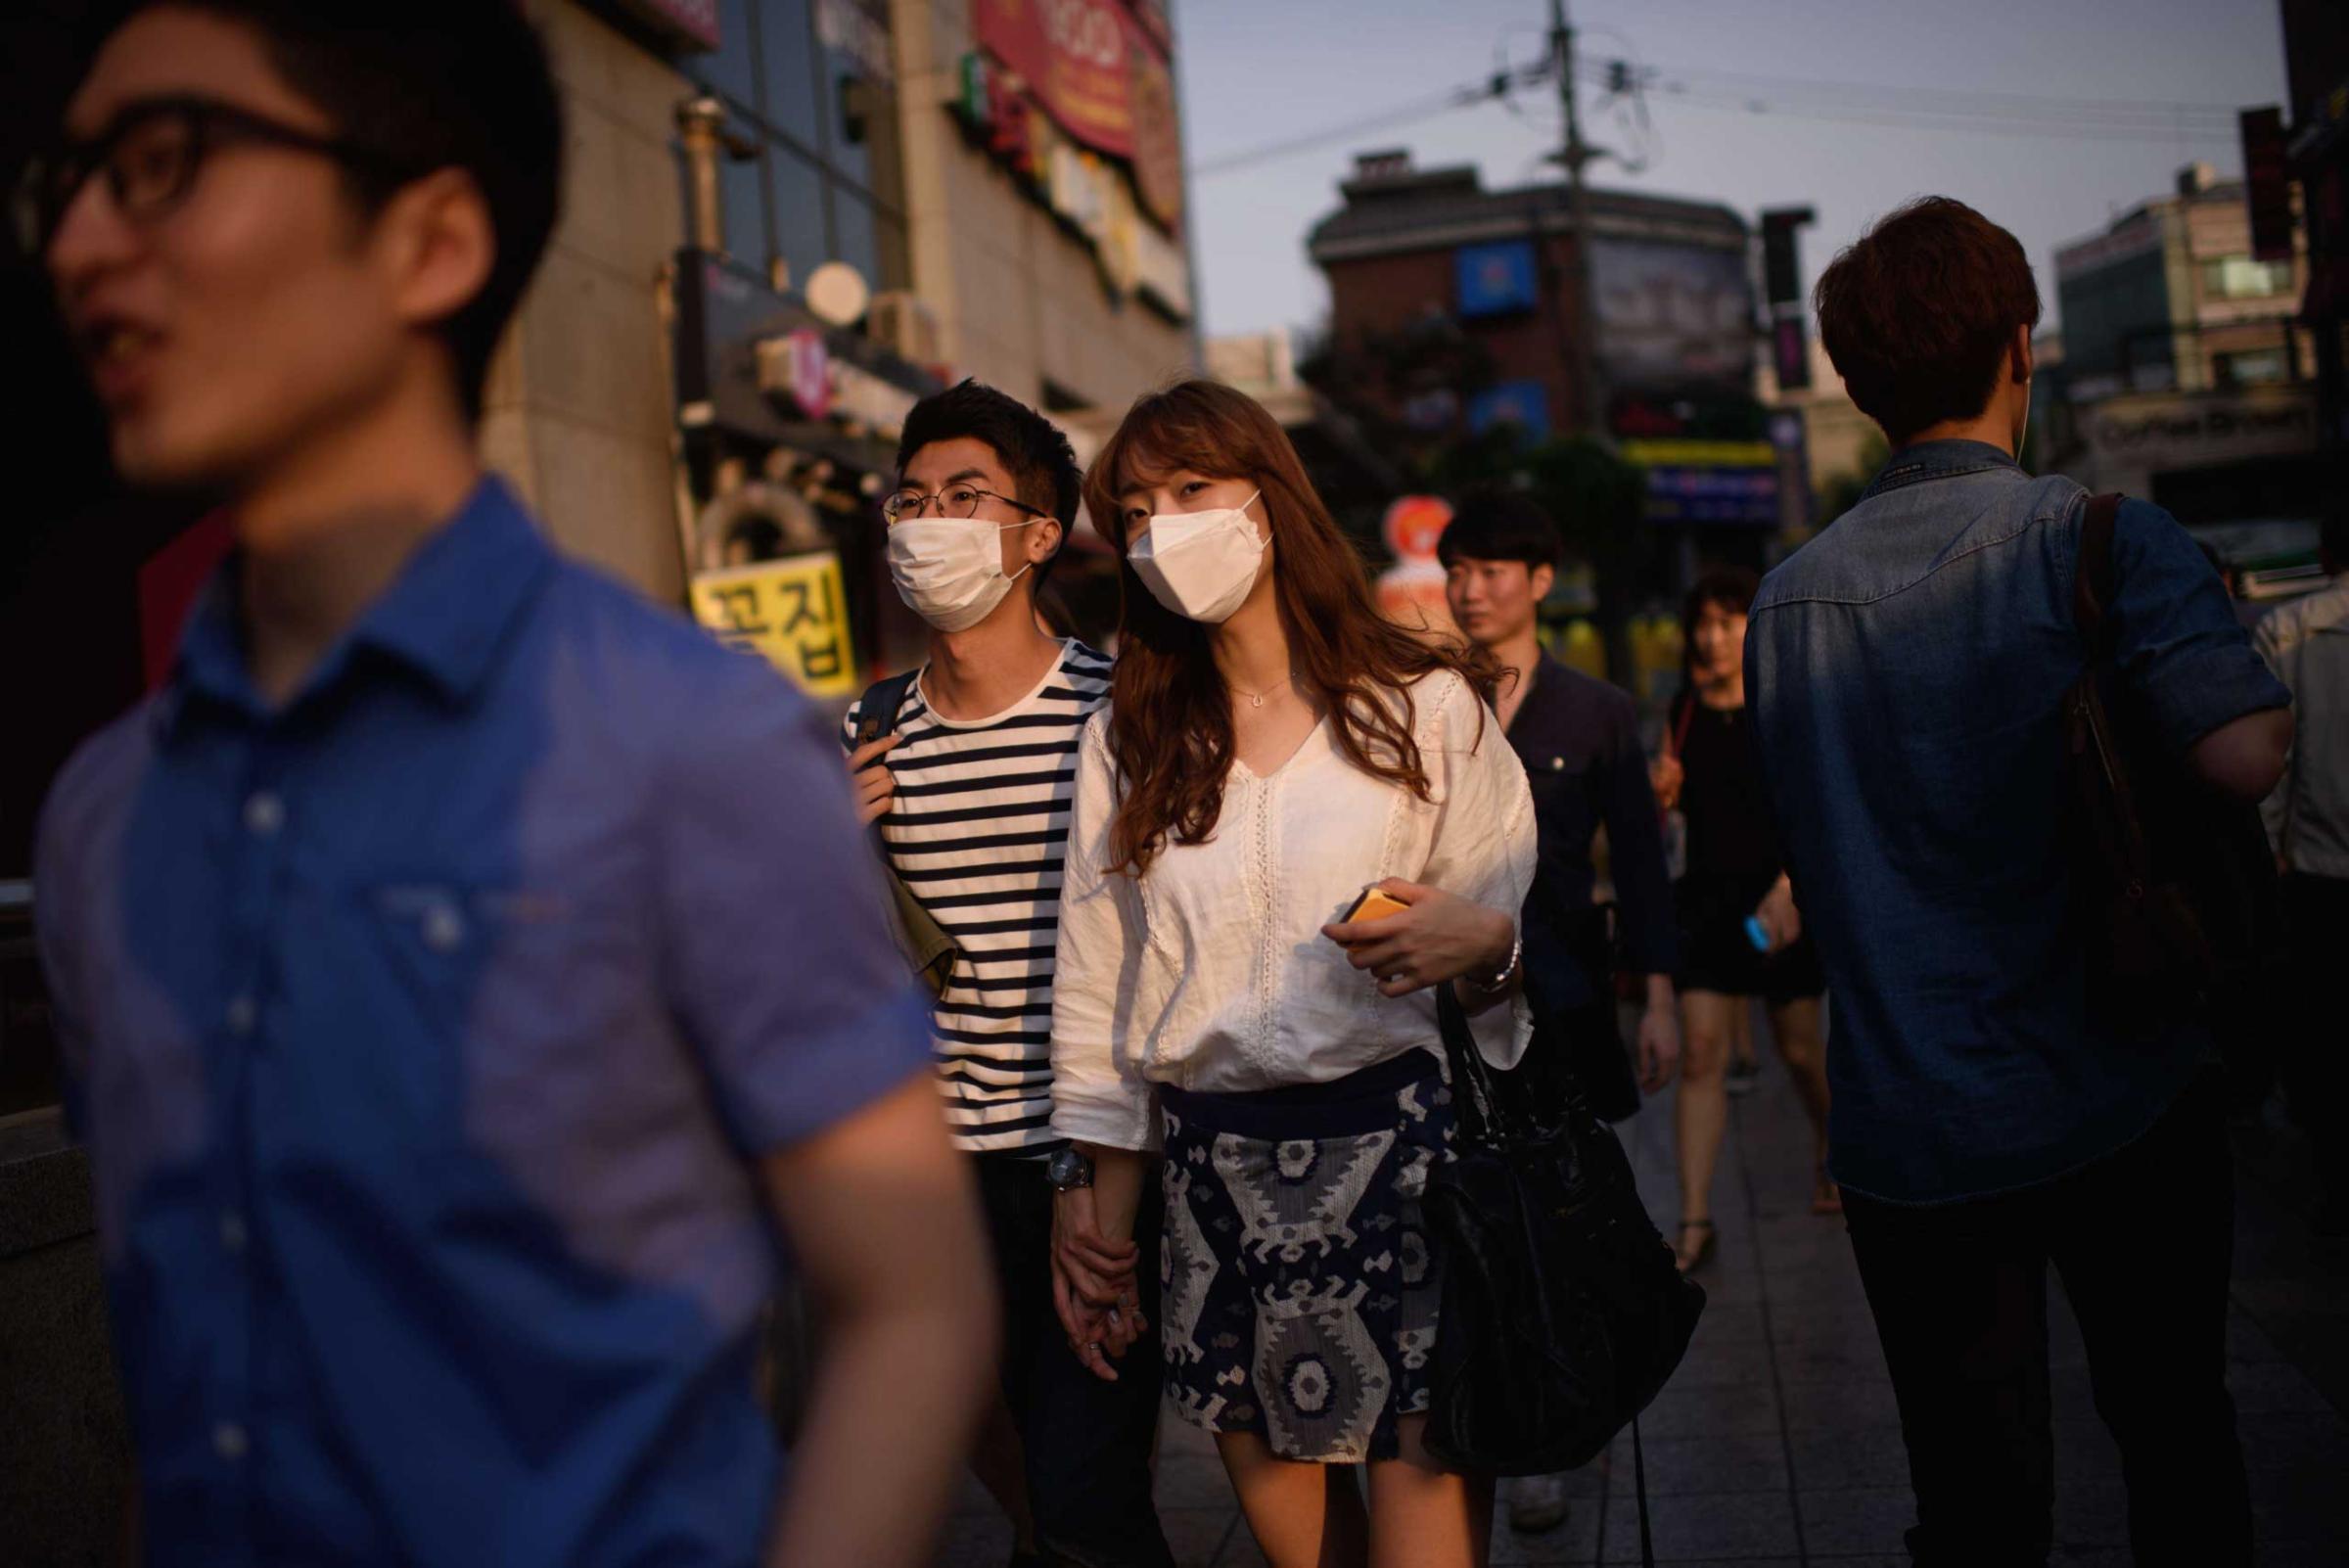 MERS south korea face masks